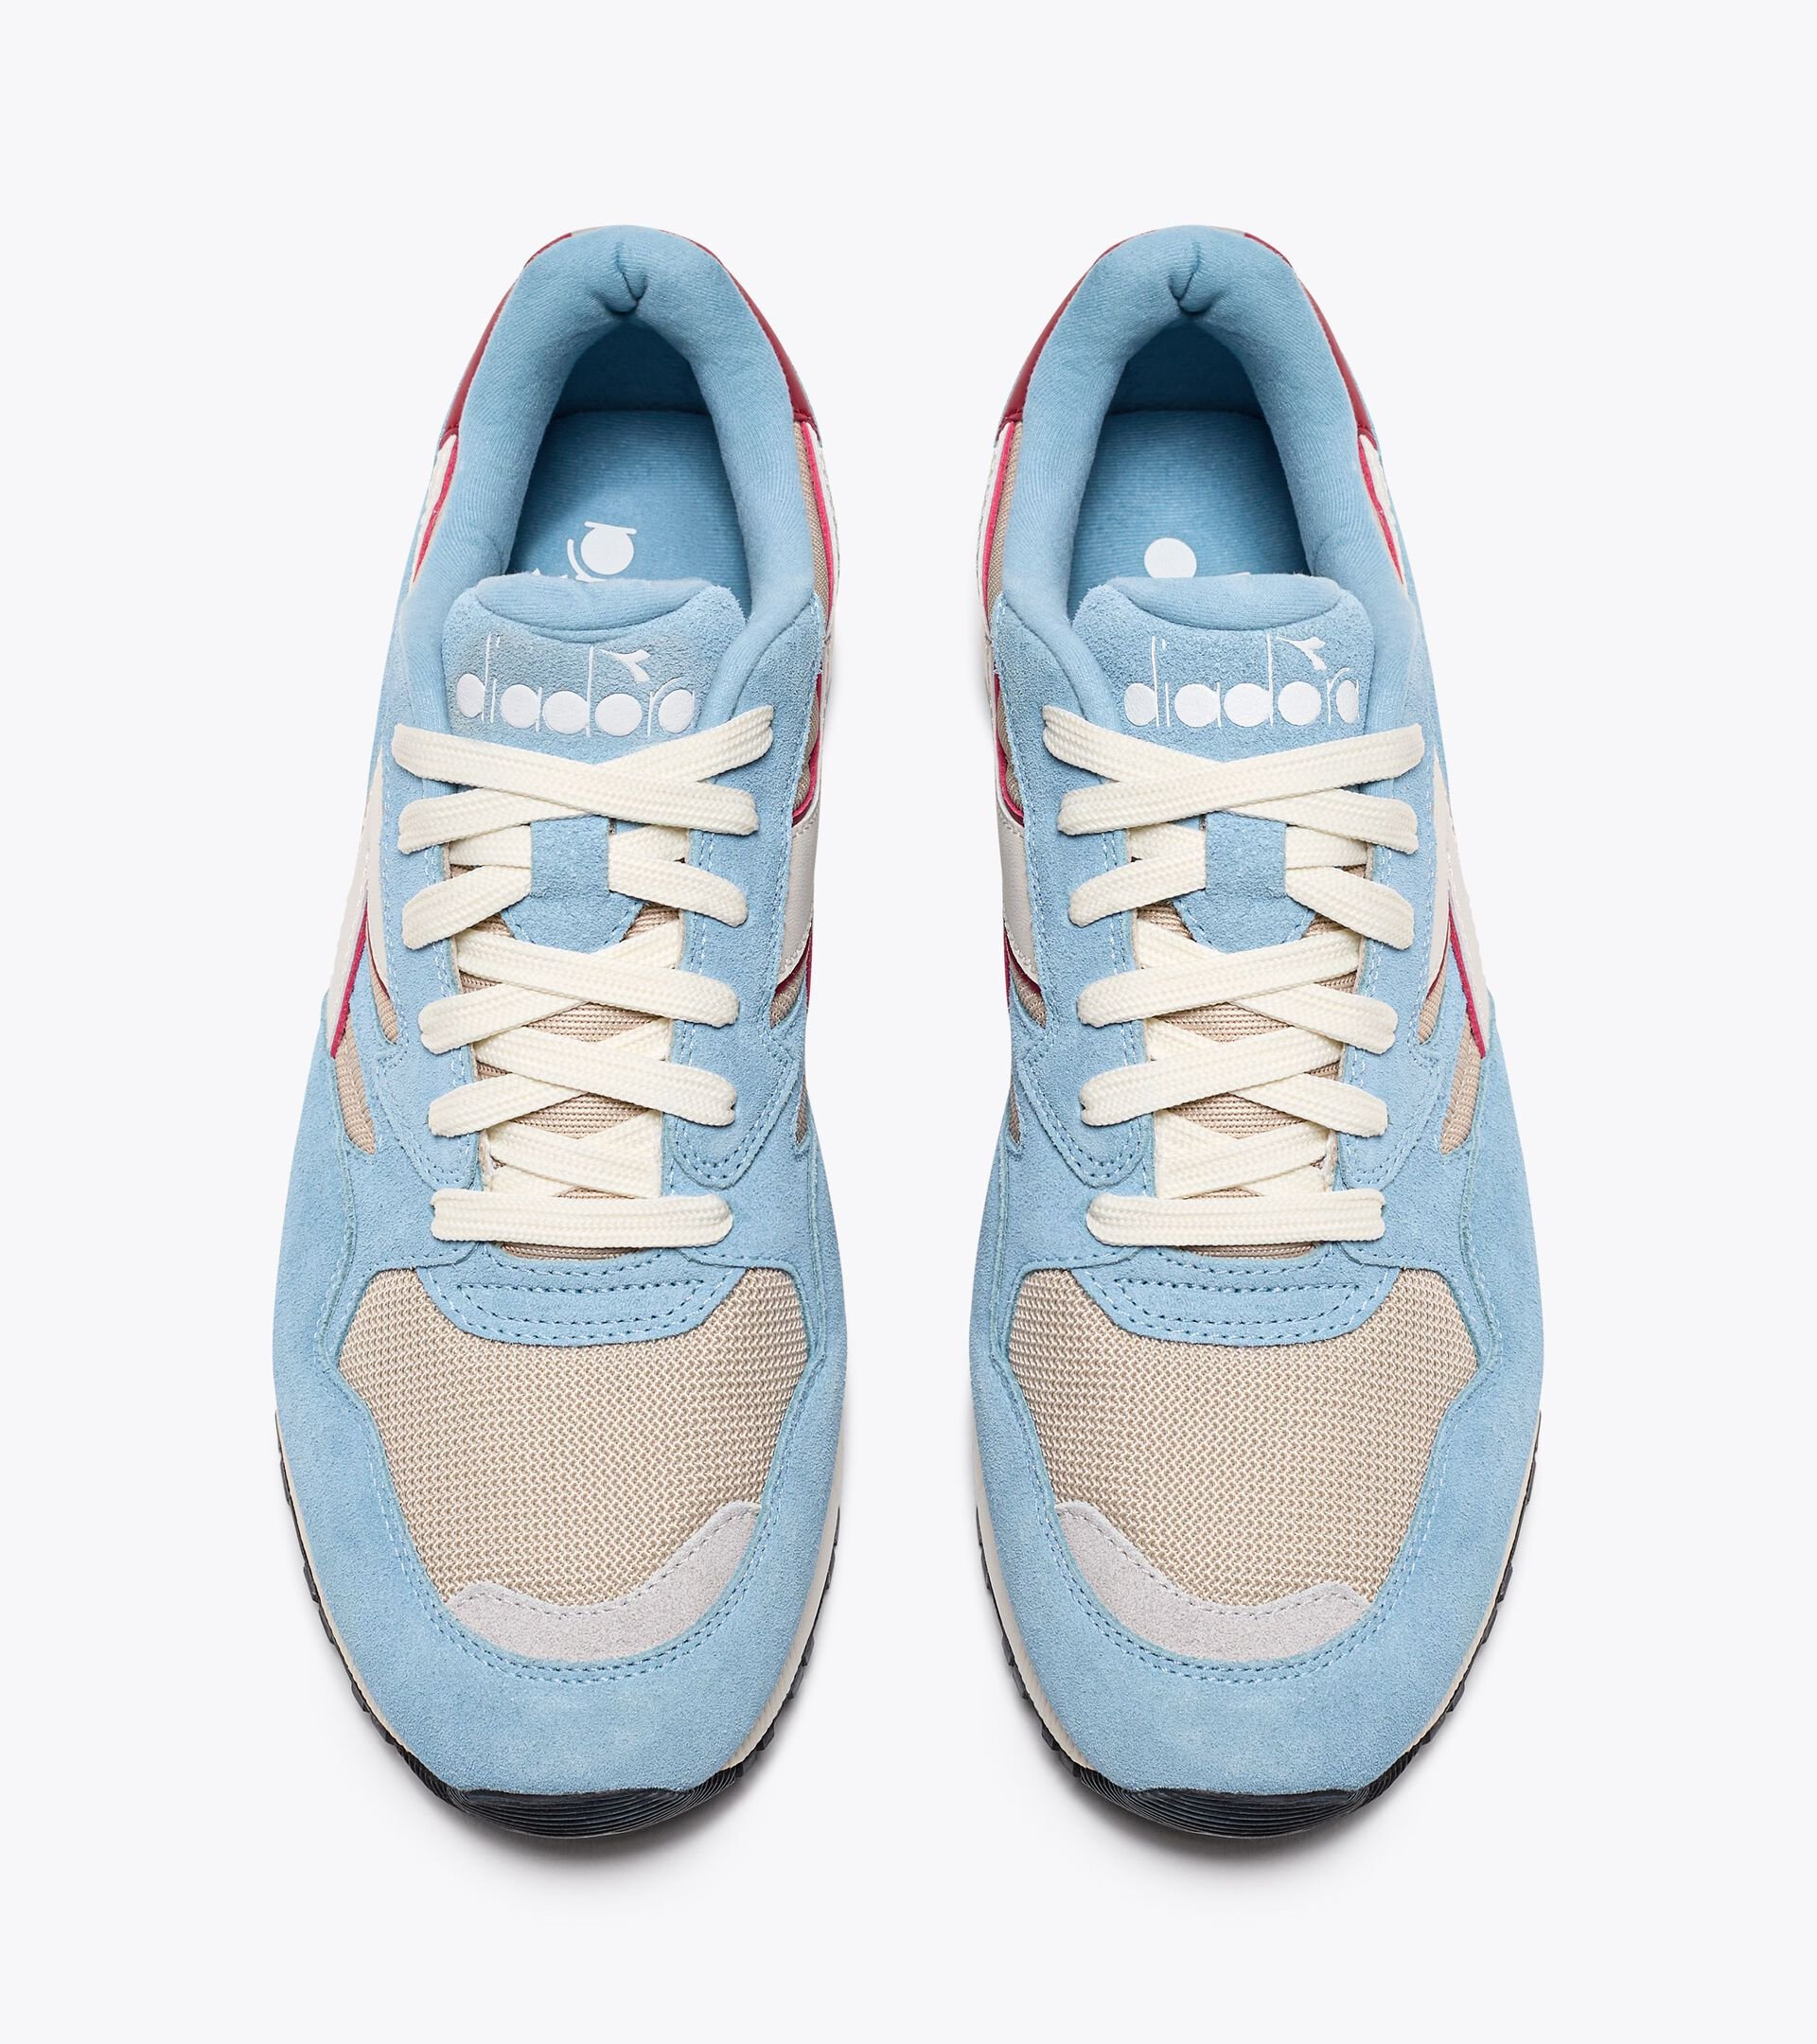 Sporty sneakers - Gender neutral N902 OYSTER GRAY/DUSK BLUE - Diadora